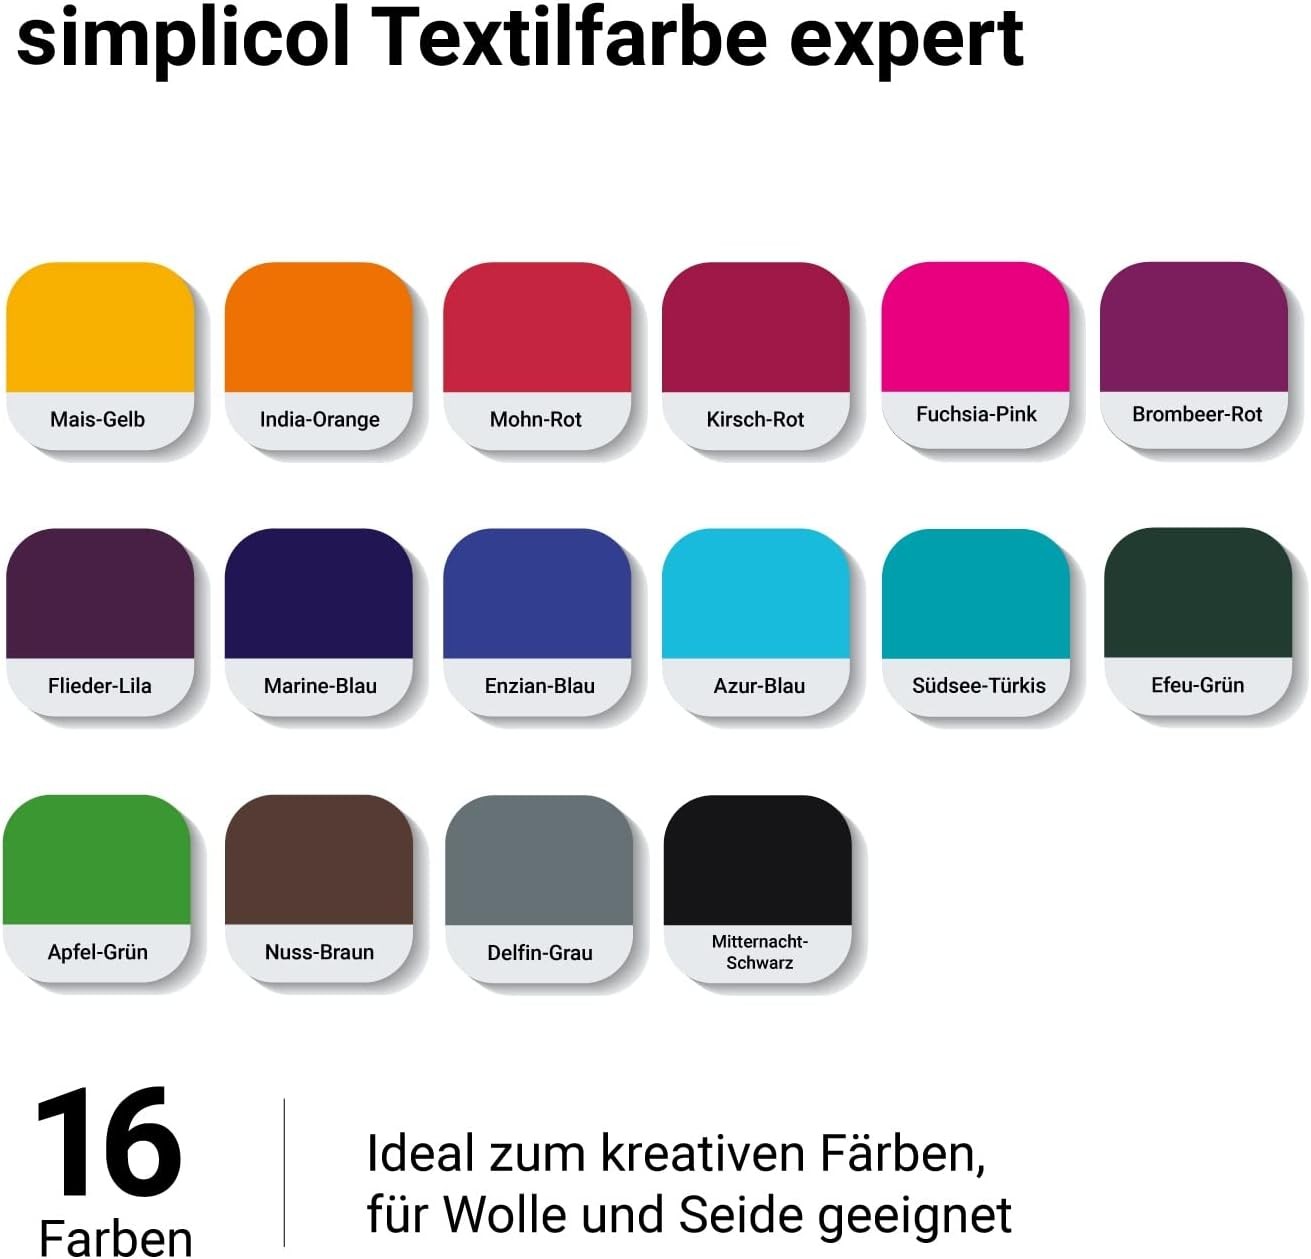 Simplicol Textilfarbe expert Apfel-Grün 300g 2er Pack